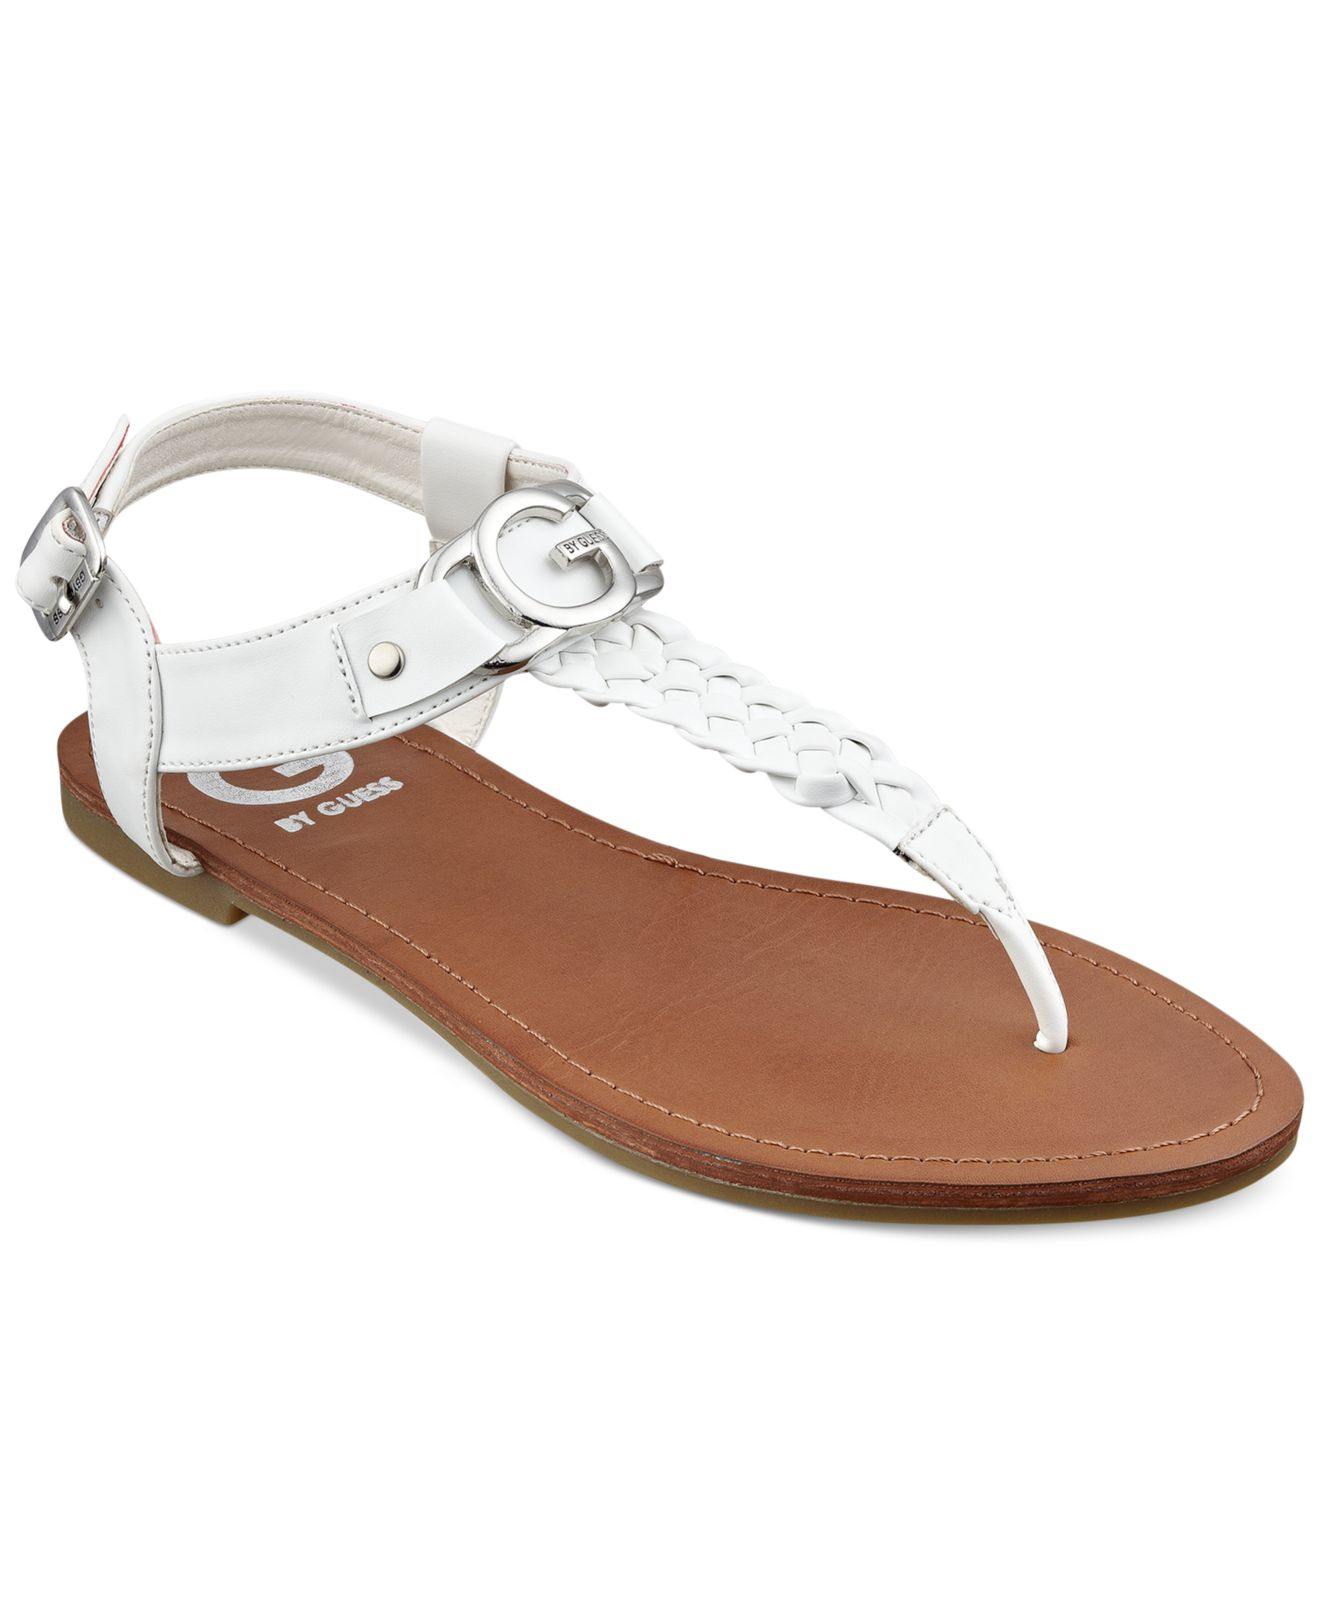 Lyst - G by guess Women's Lyrikk Flat Thong Sandals in White